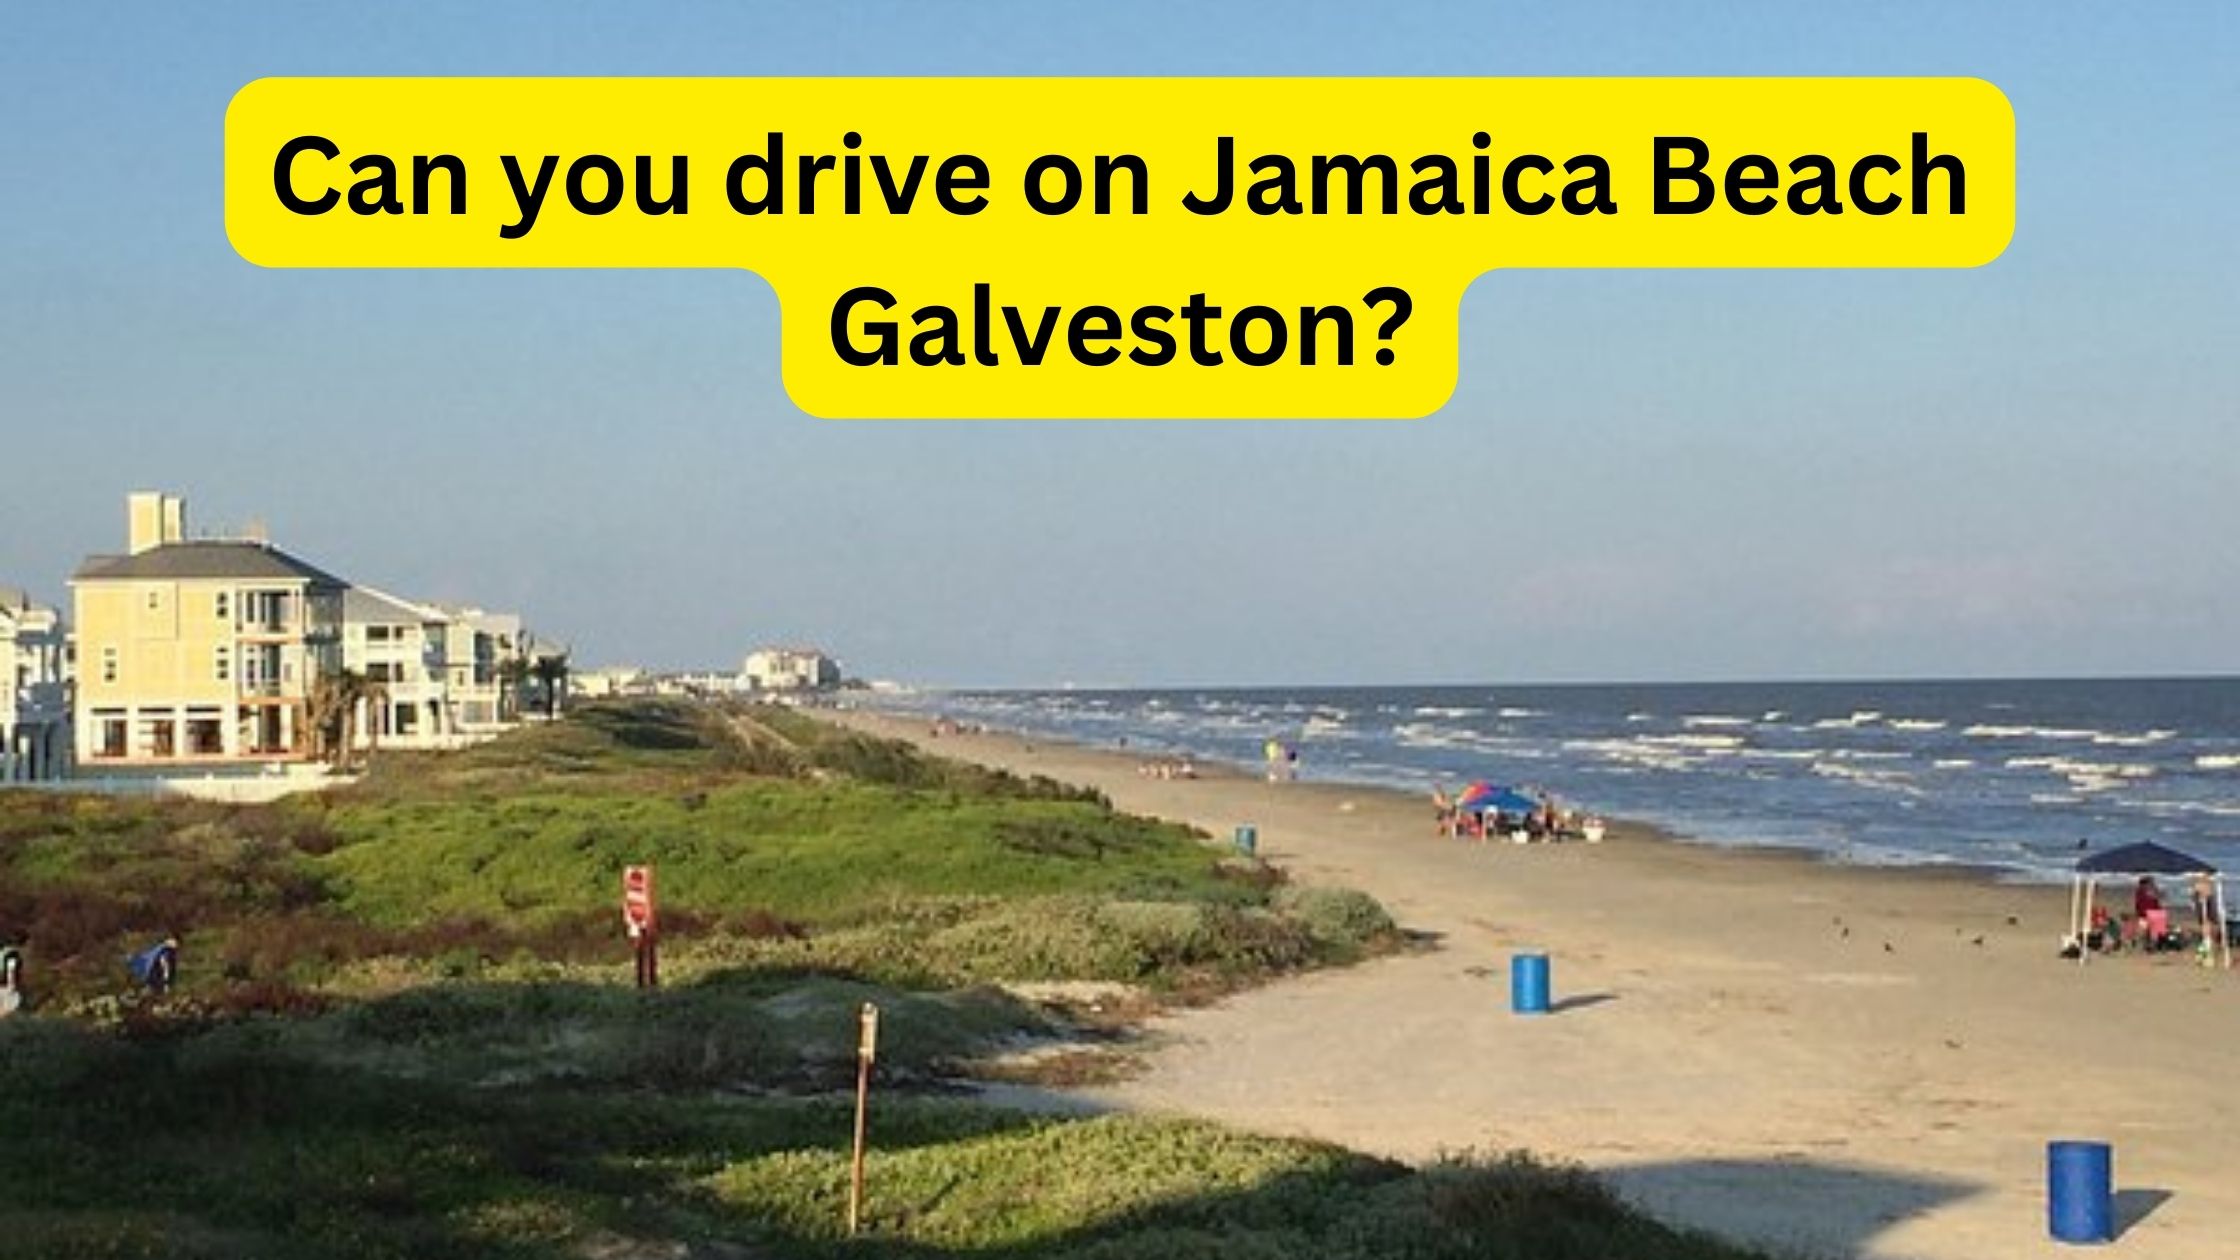 Can you drive on Jamaica Beach Galveston?